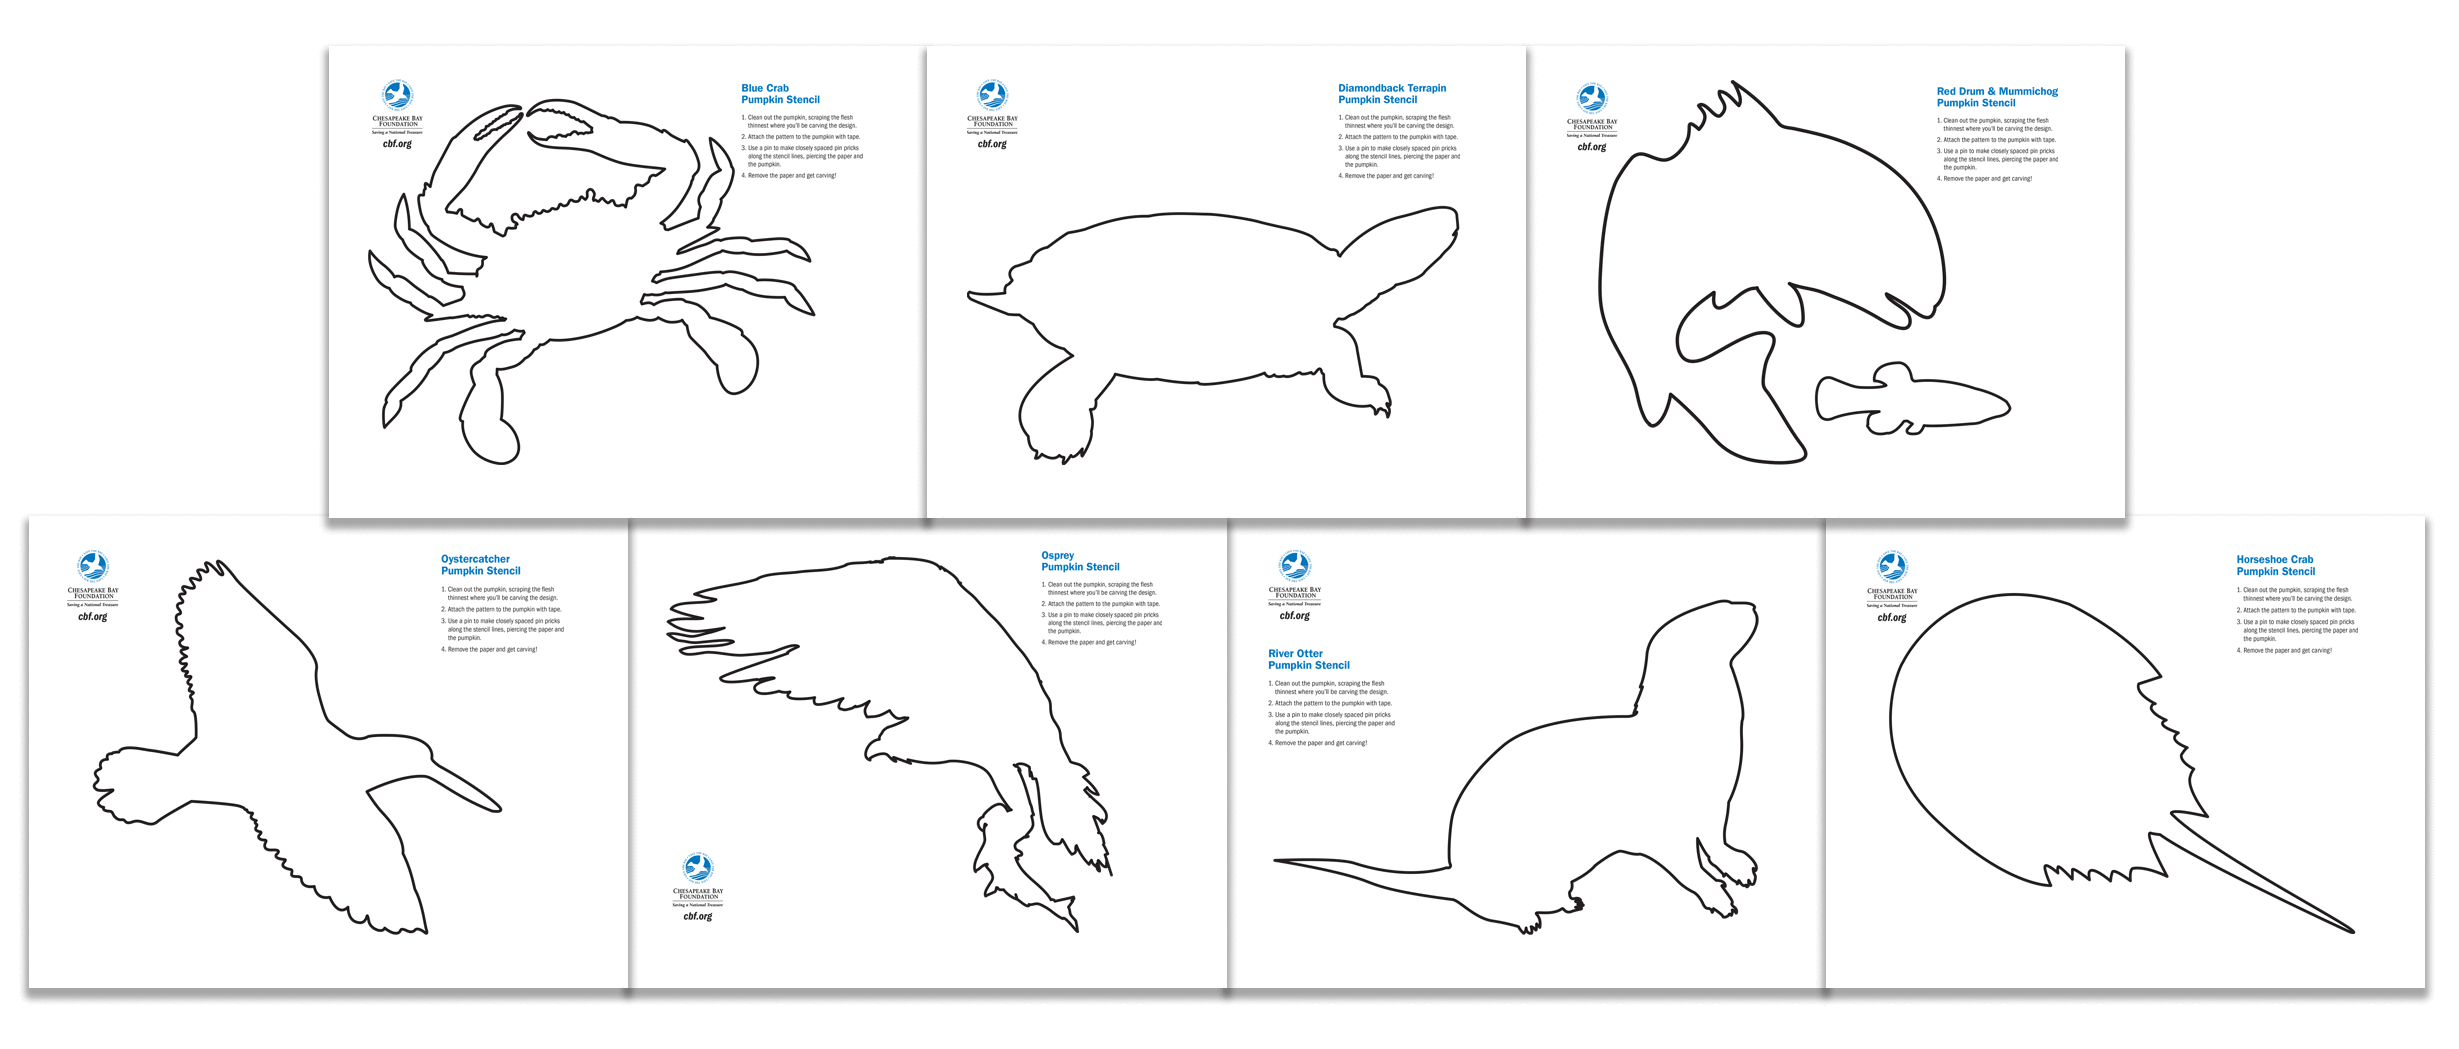 Graphic of several Chesapeake critter jack-o-lantern designs.